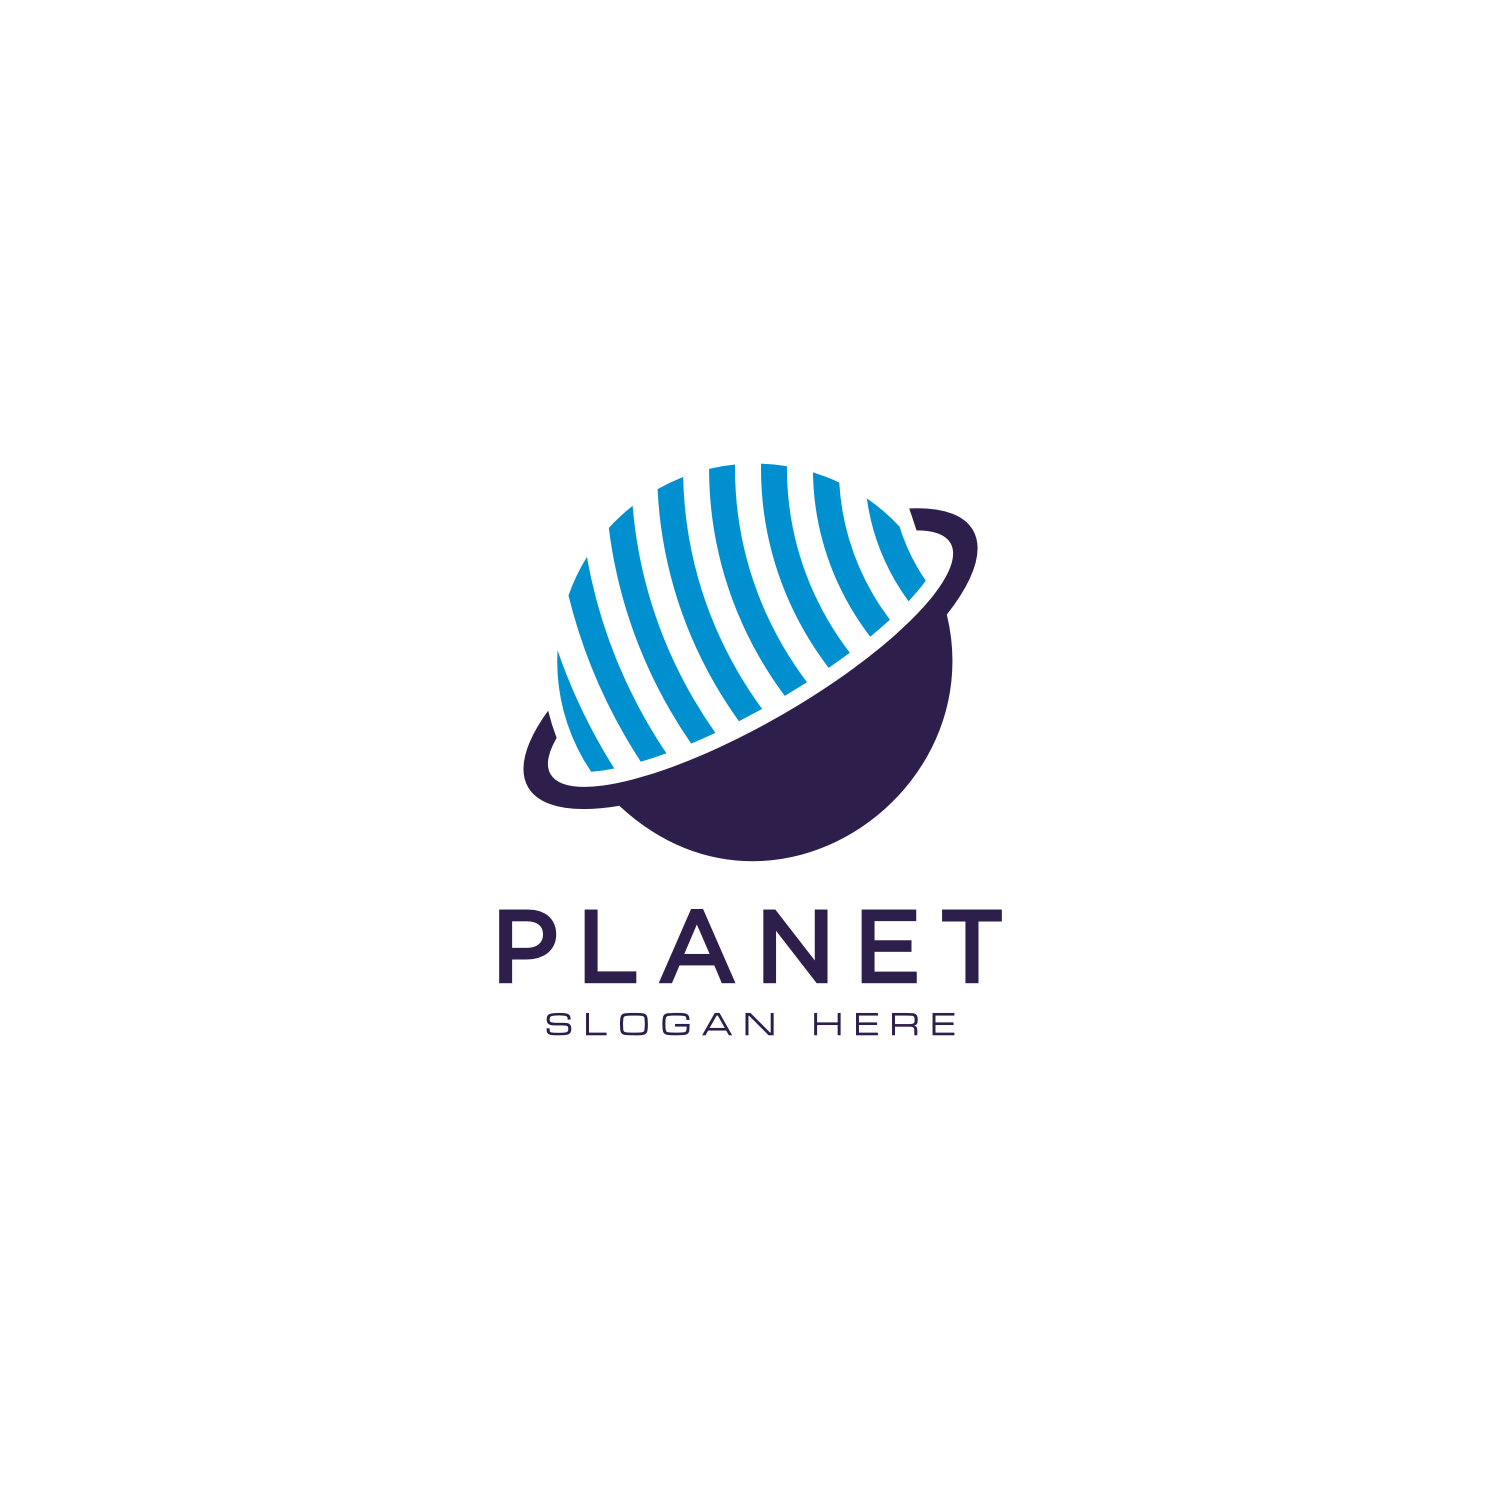 Creative Planet Orbit Abstract Logo Design